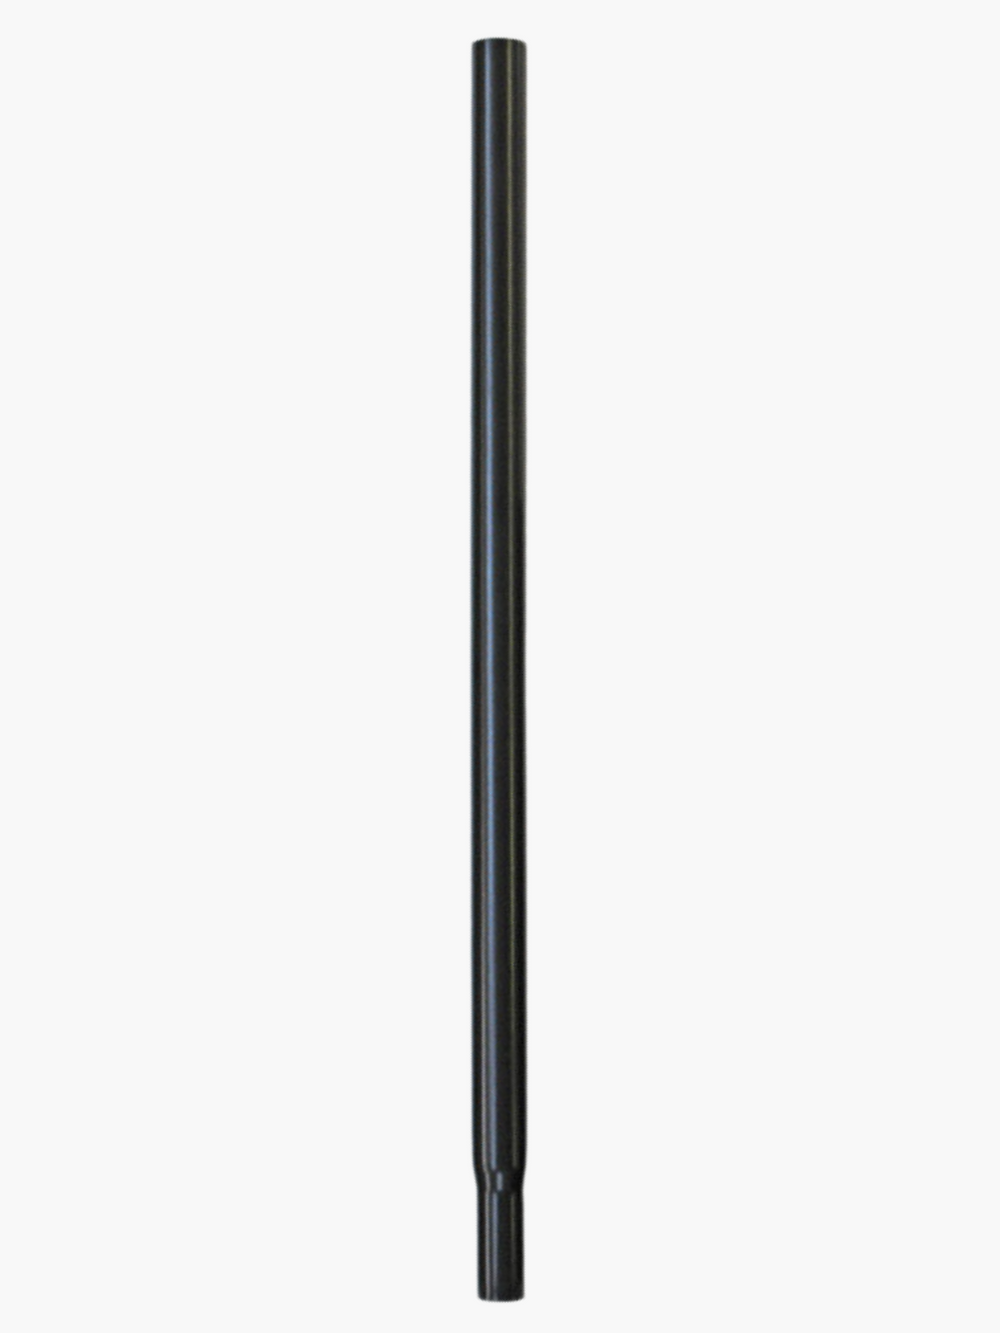 Pole Extension - 20